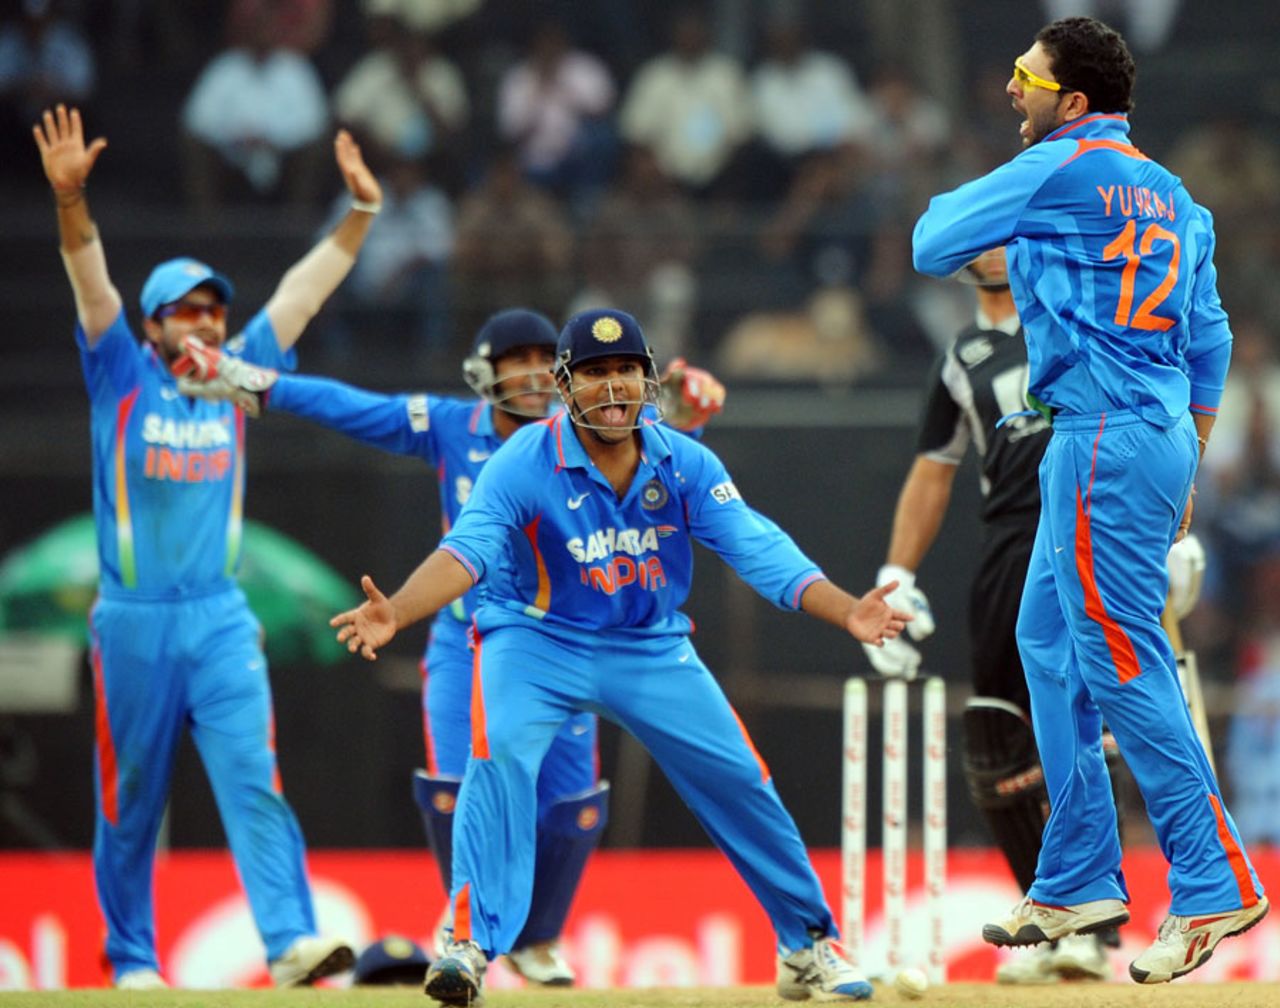 Yuvraj Singh is successful in his lbw appeal against Grant Elliott, India v New Zealand, 5th ODI, Chennai, December 10, 2010